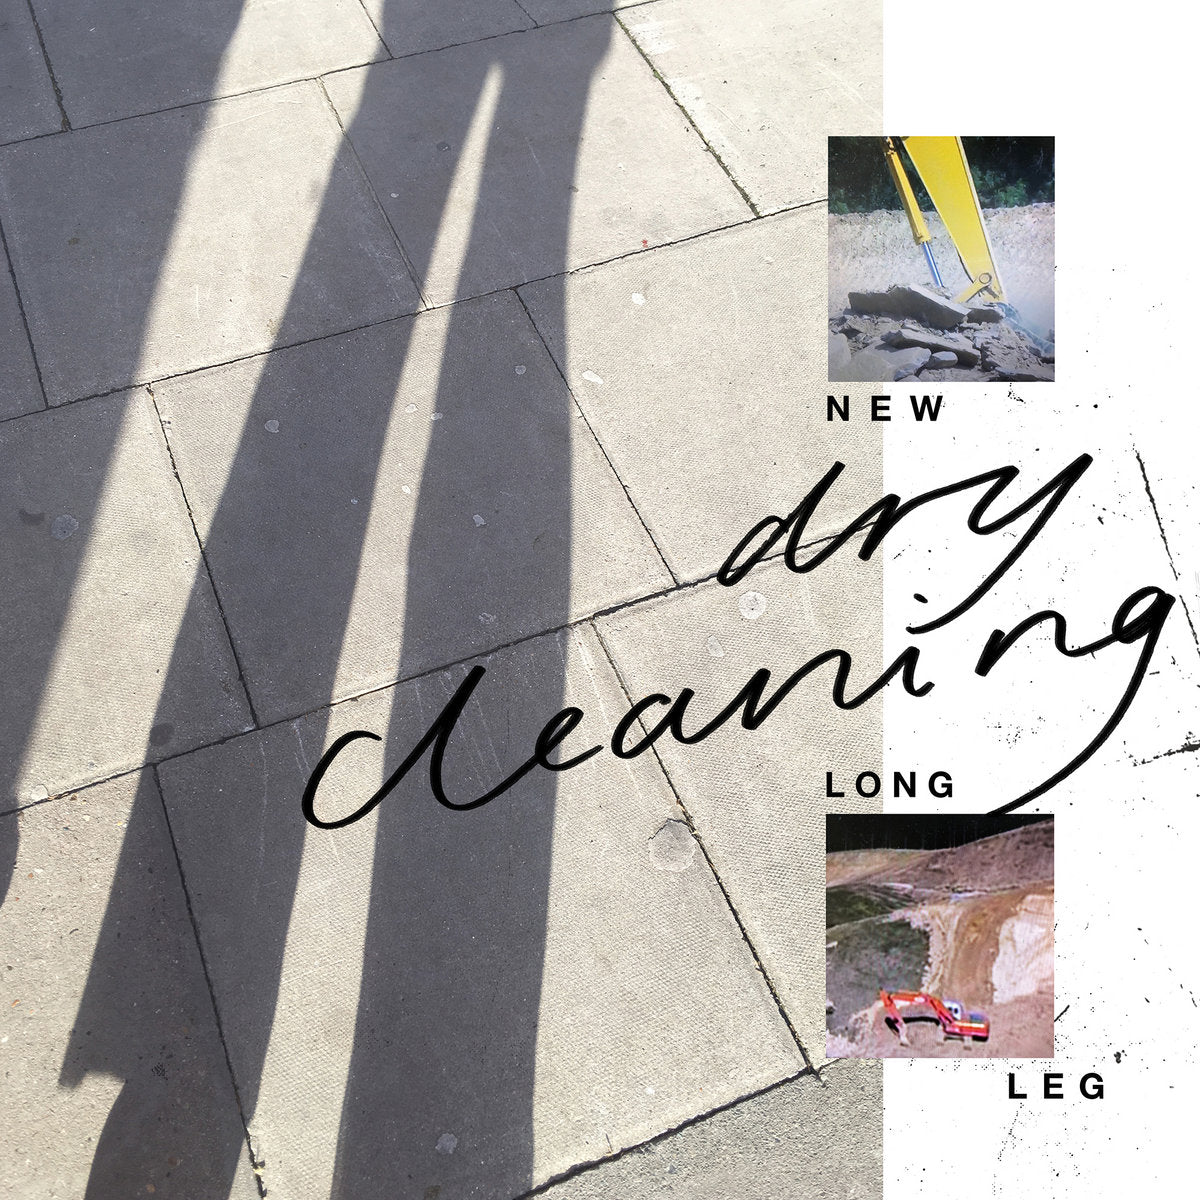 New Long Leg (New LP)